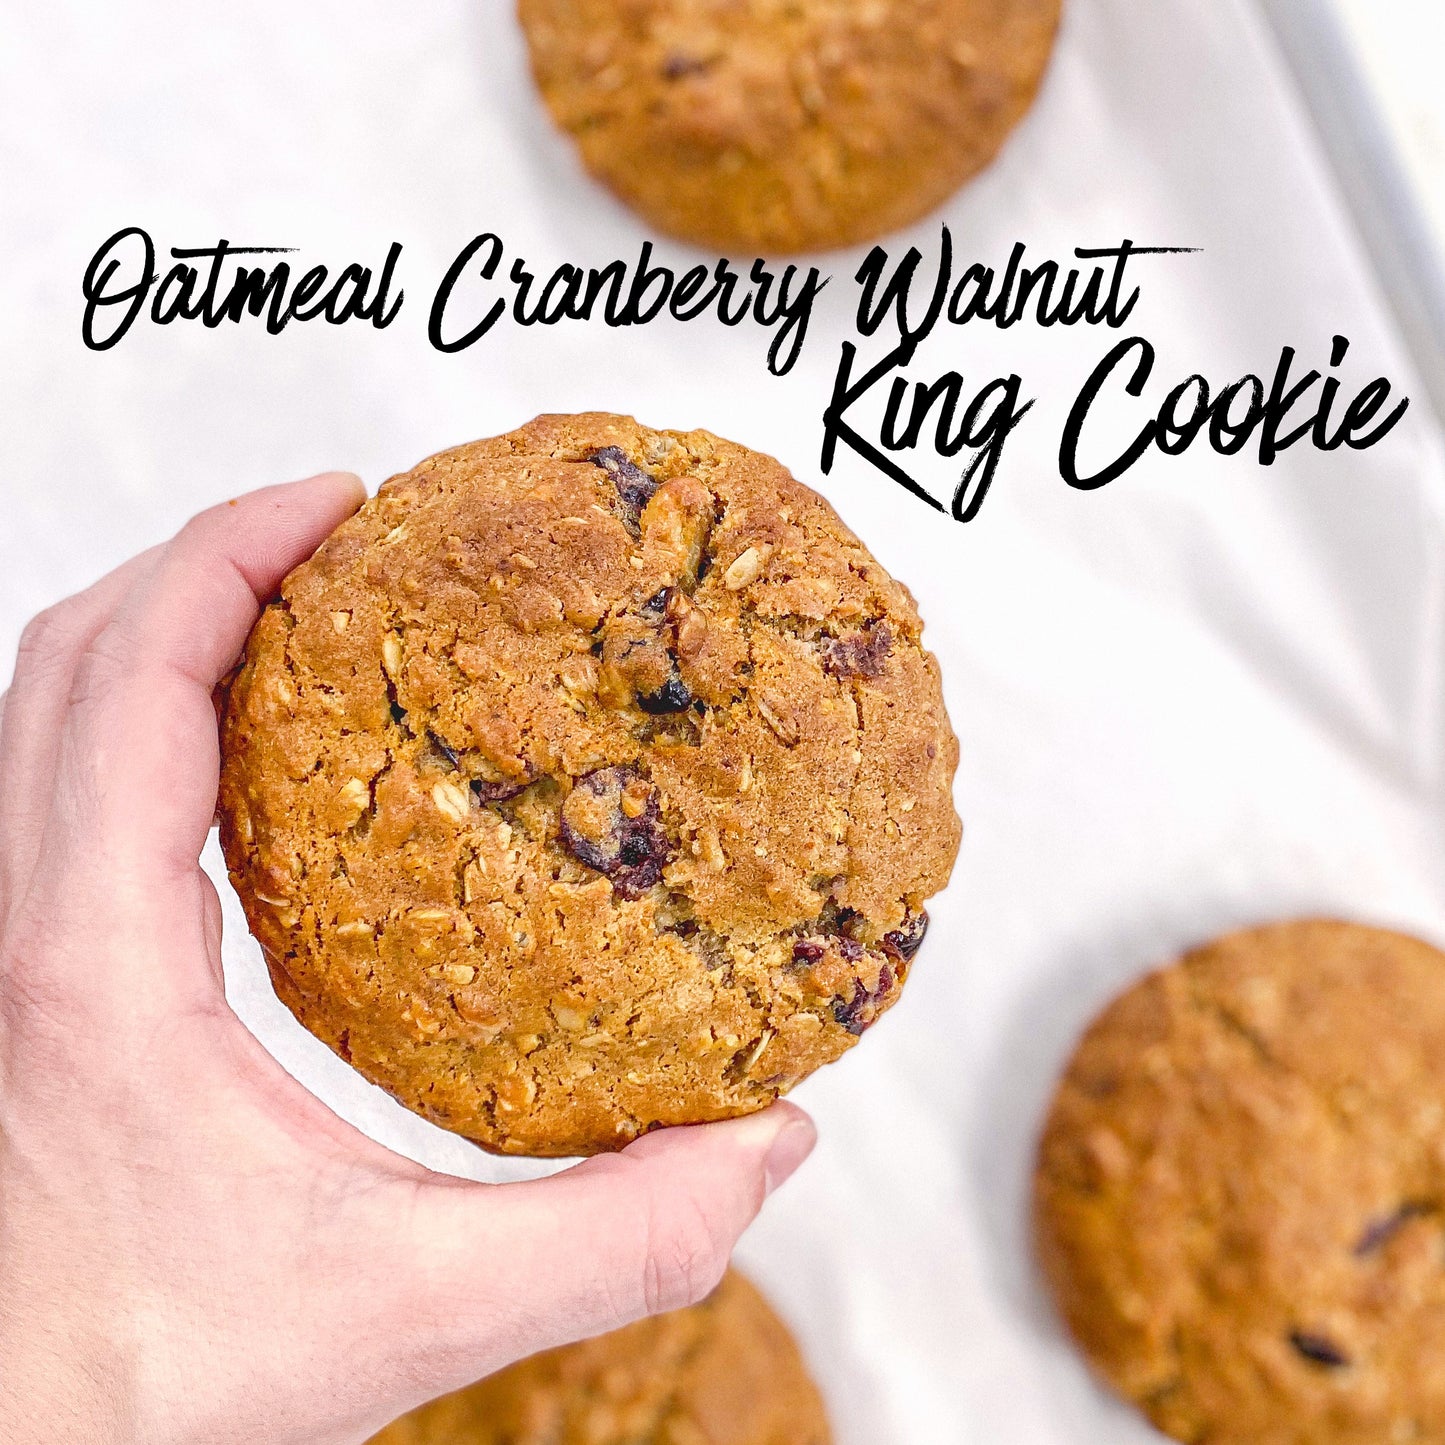 Oatmeal Cranberry Walnut King Cookie